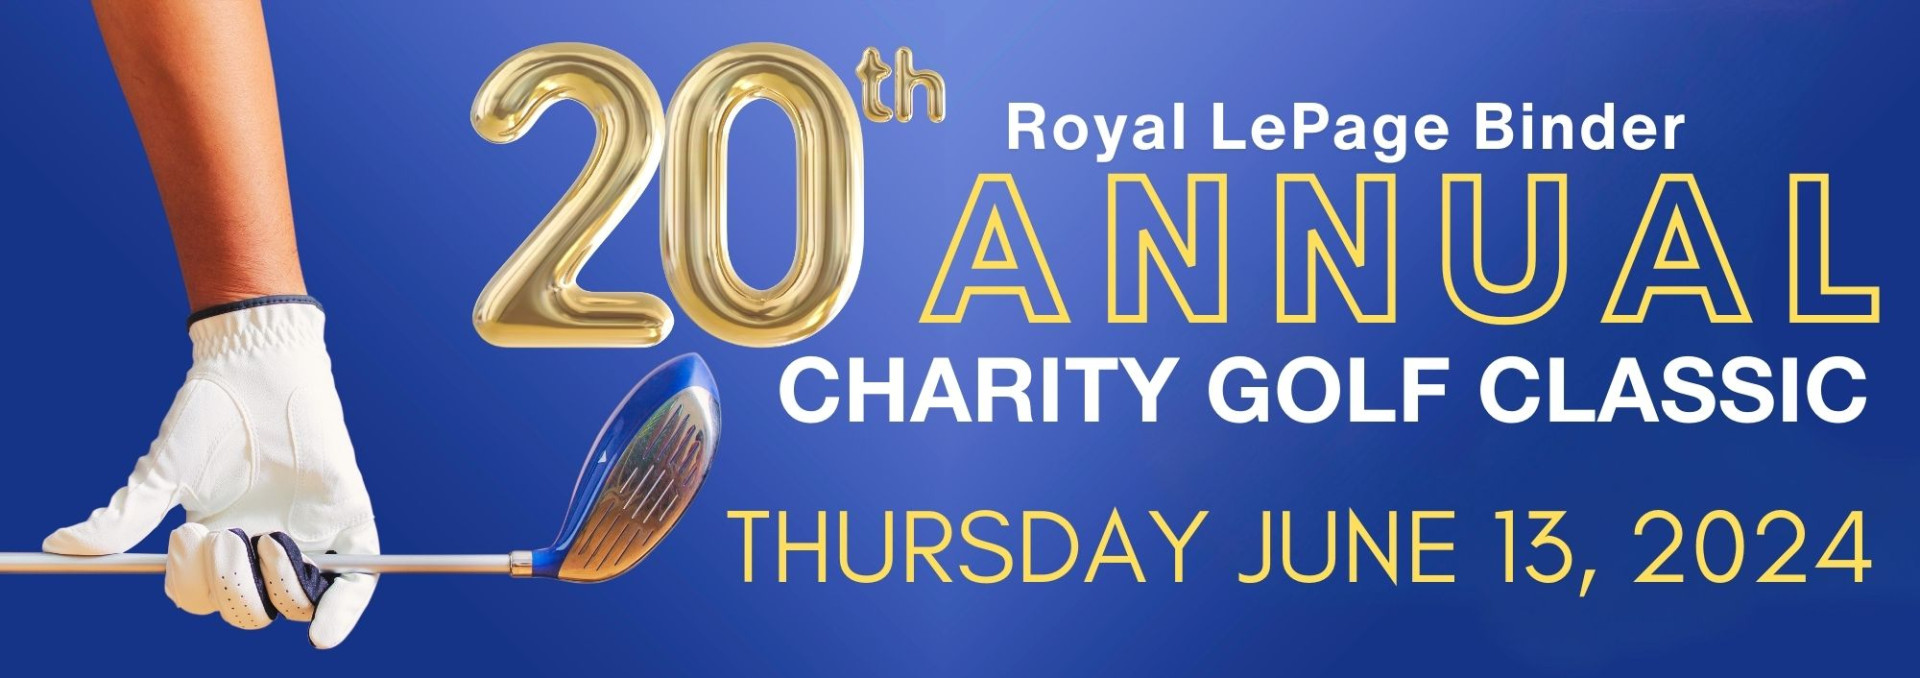 The 20th Annual RLB Charity Golf Classic for Hiatus House